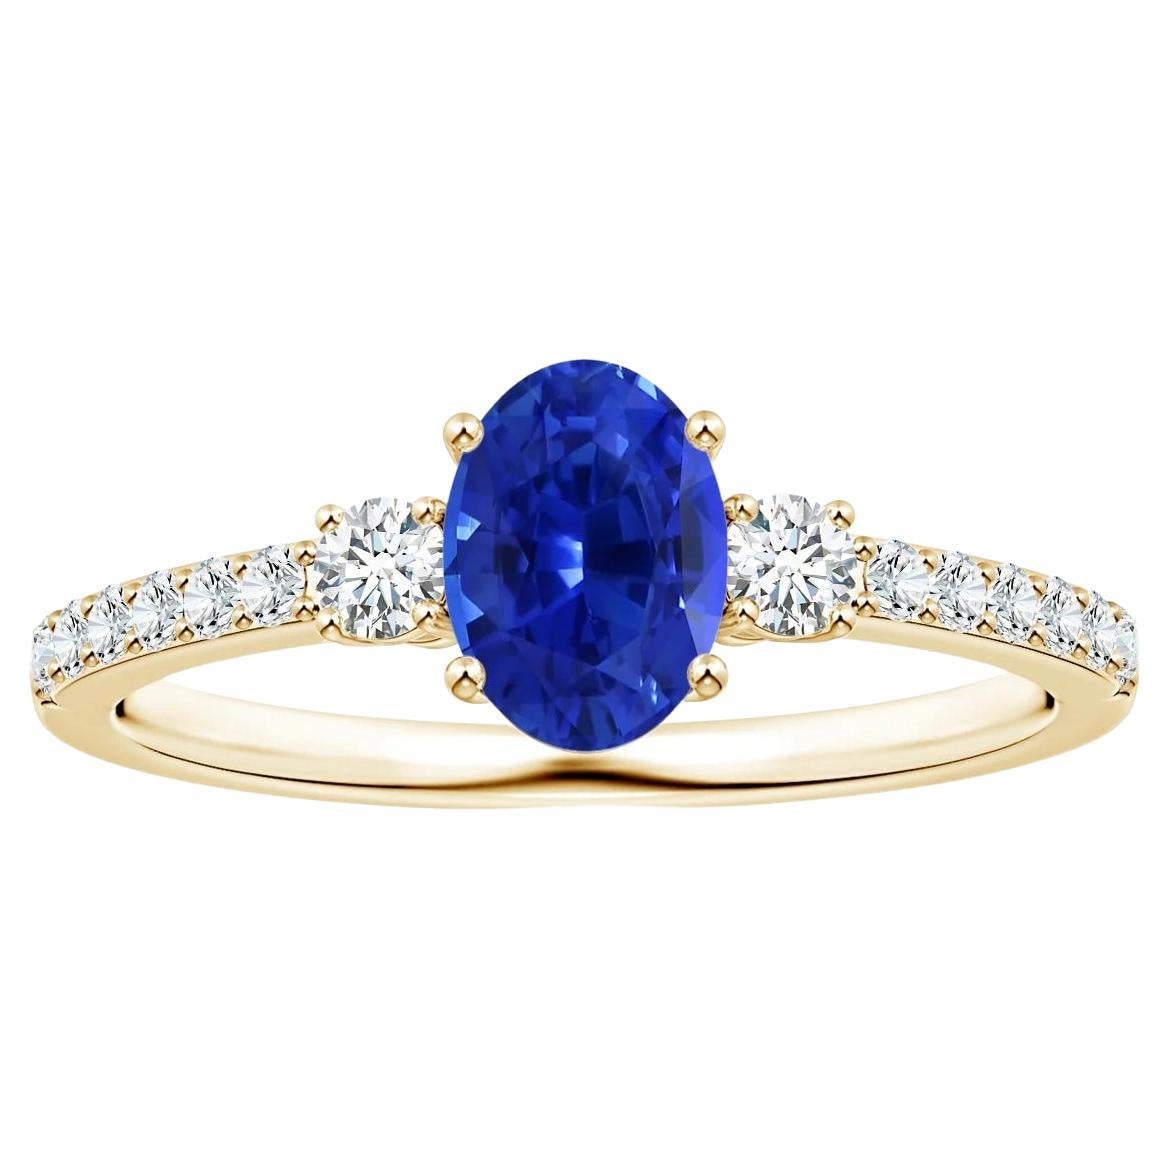 ANGARA Bague en or jaune avec saphir bleu naturel à 3 pierres et diamants certifié GIA